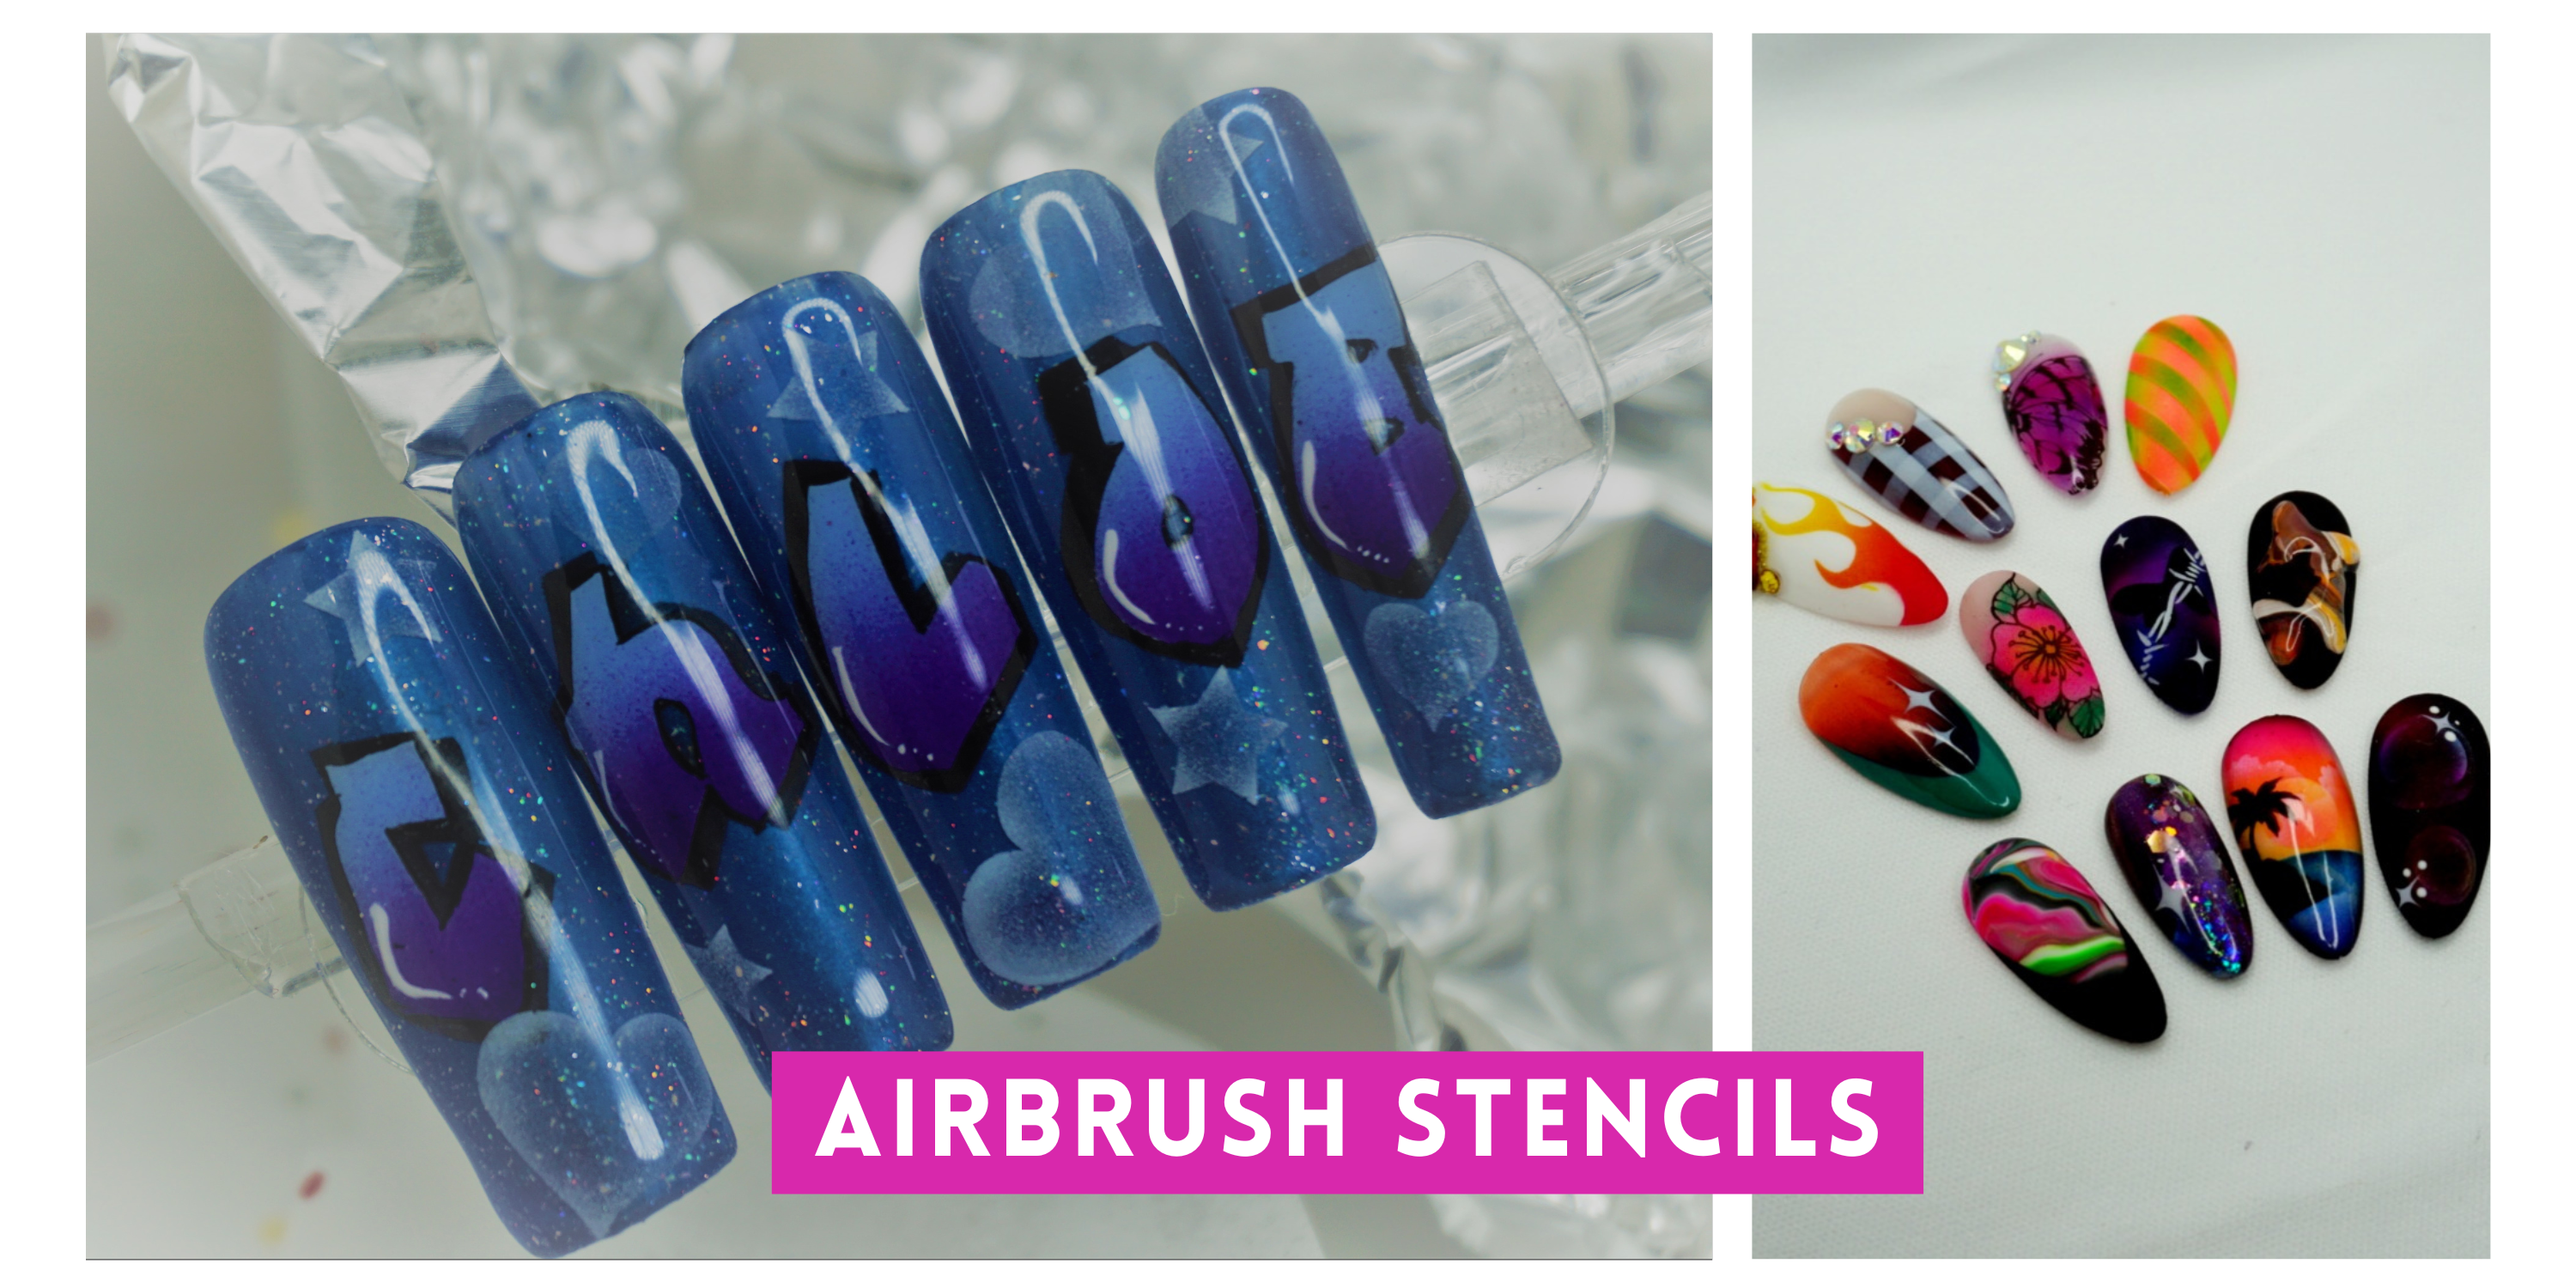 20Psc2017 New Fashion Airbrush Nail Stencils Set 21 40 Tools Diy Airbrushing  Template Sheet For Airbrush Kit Nail Art Paint From Taylory, $13.2